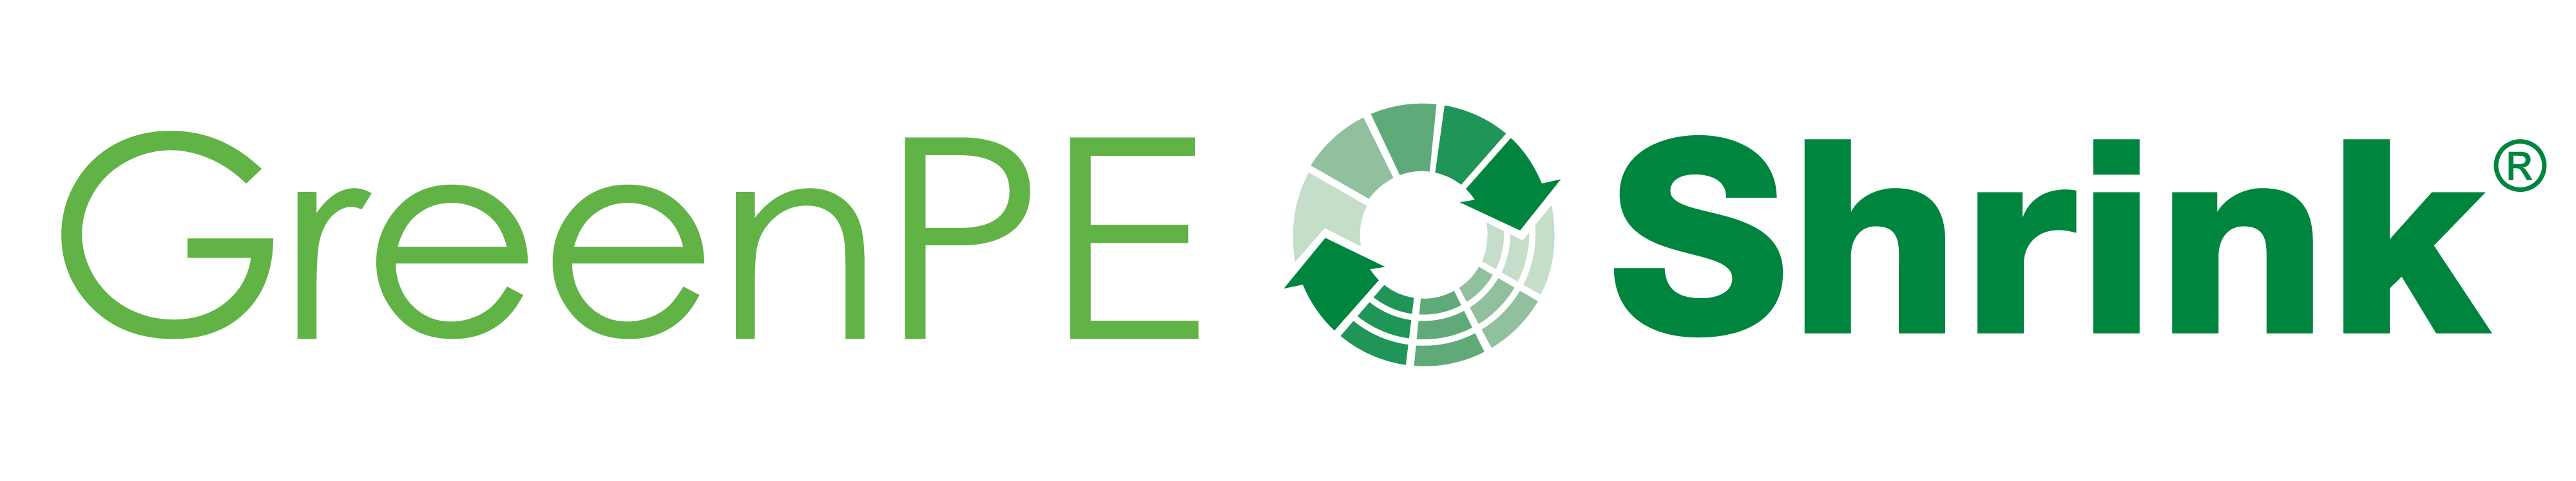 GreenPE Shrink logo